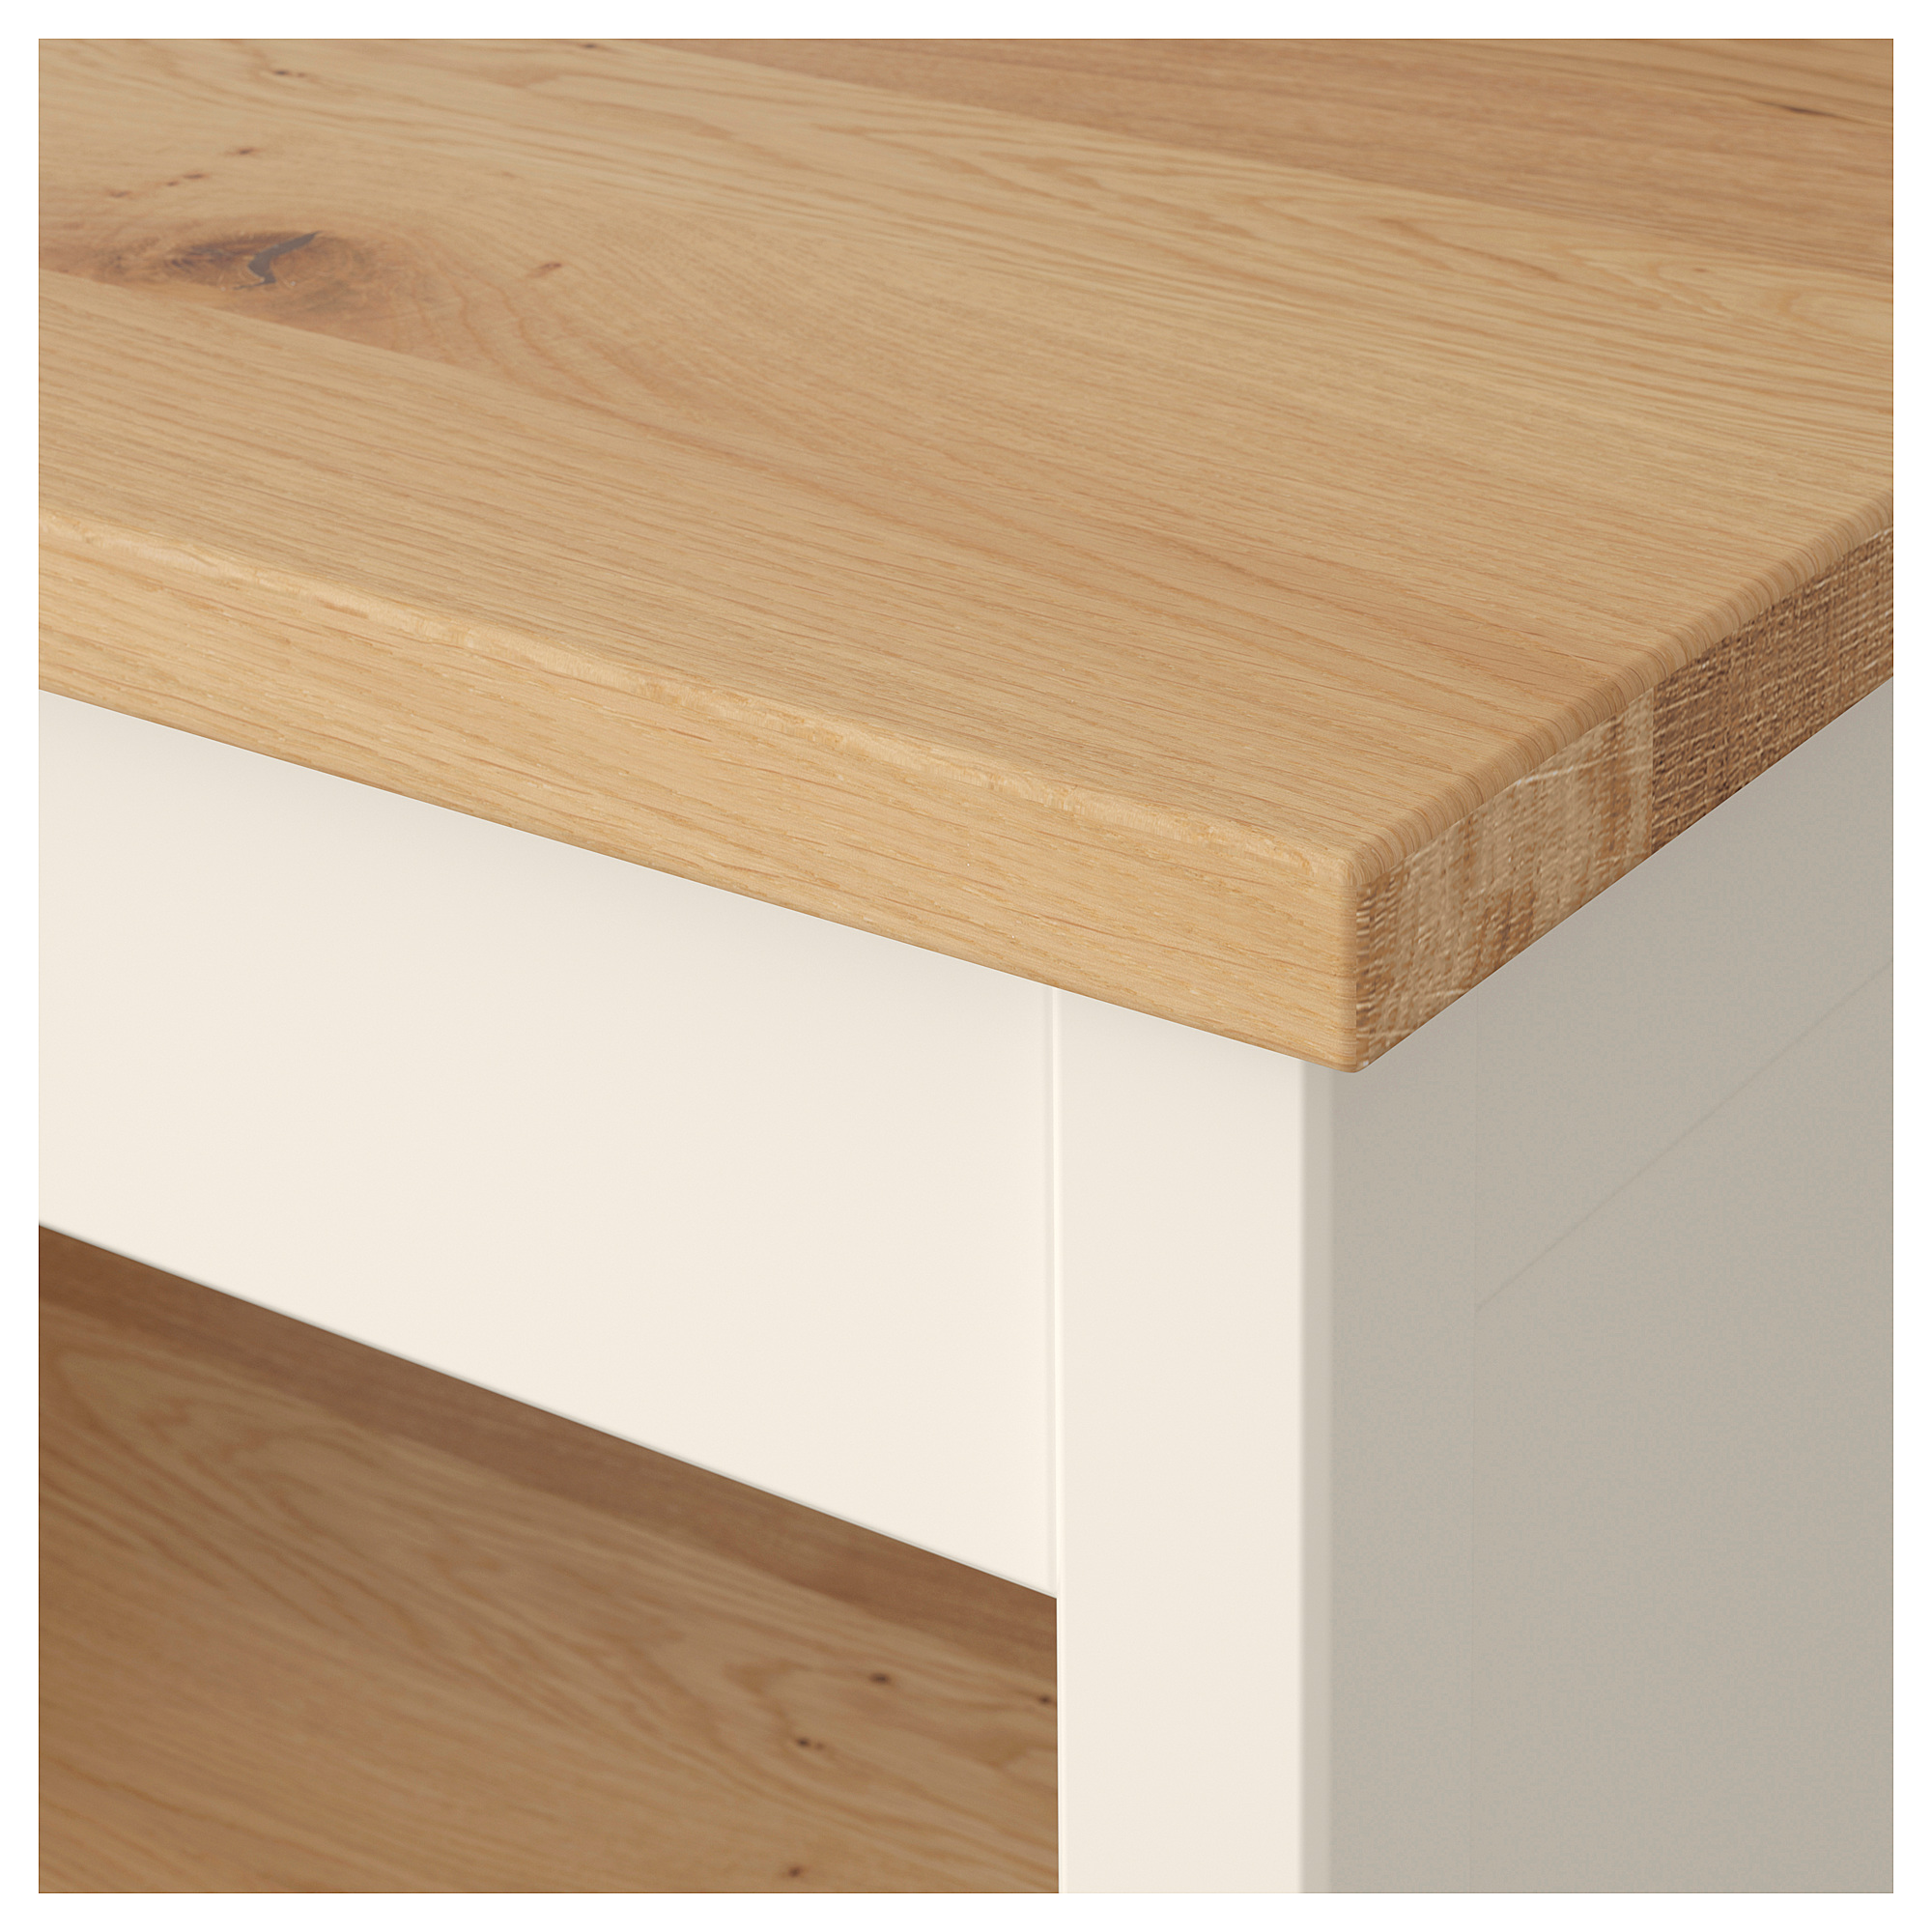 TORNVIKEN meja  tengah  dapur  putih pudar kayu oak IKEA 